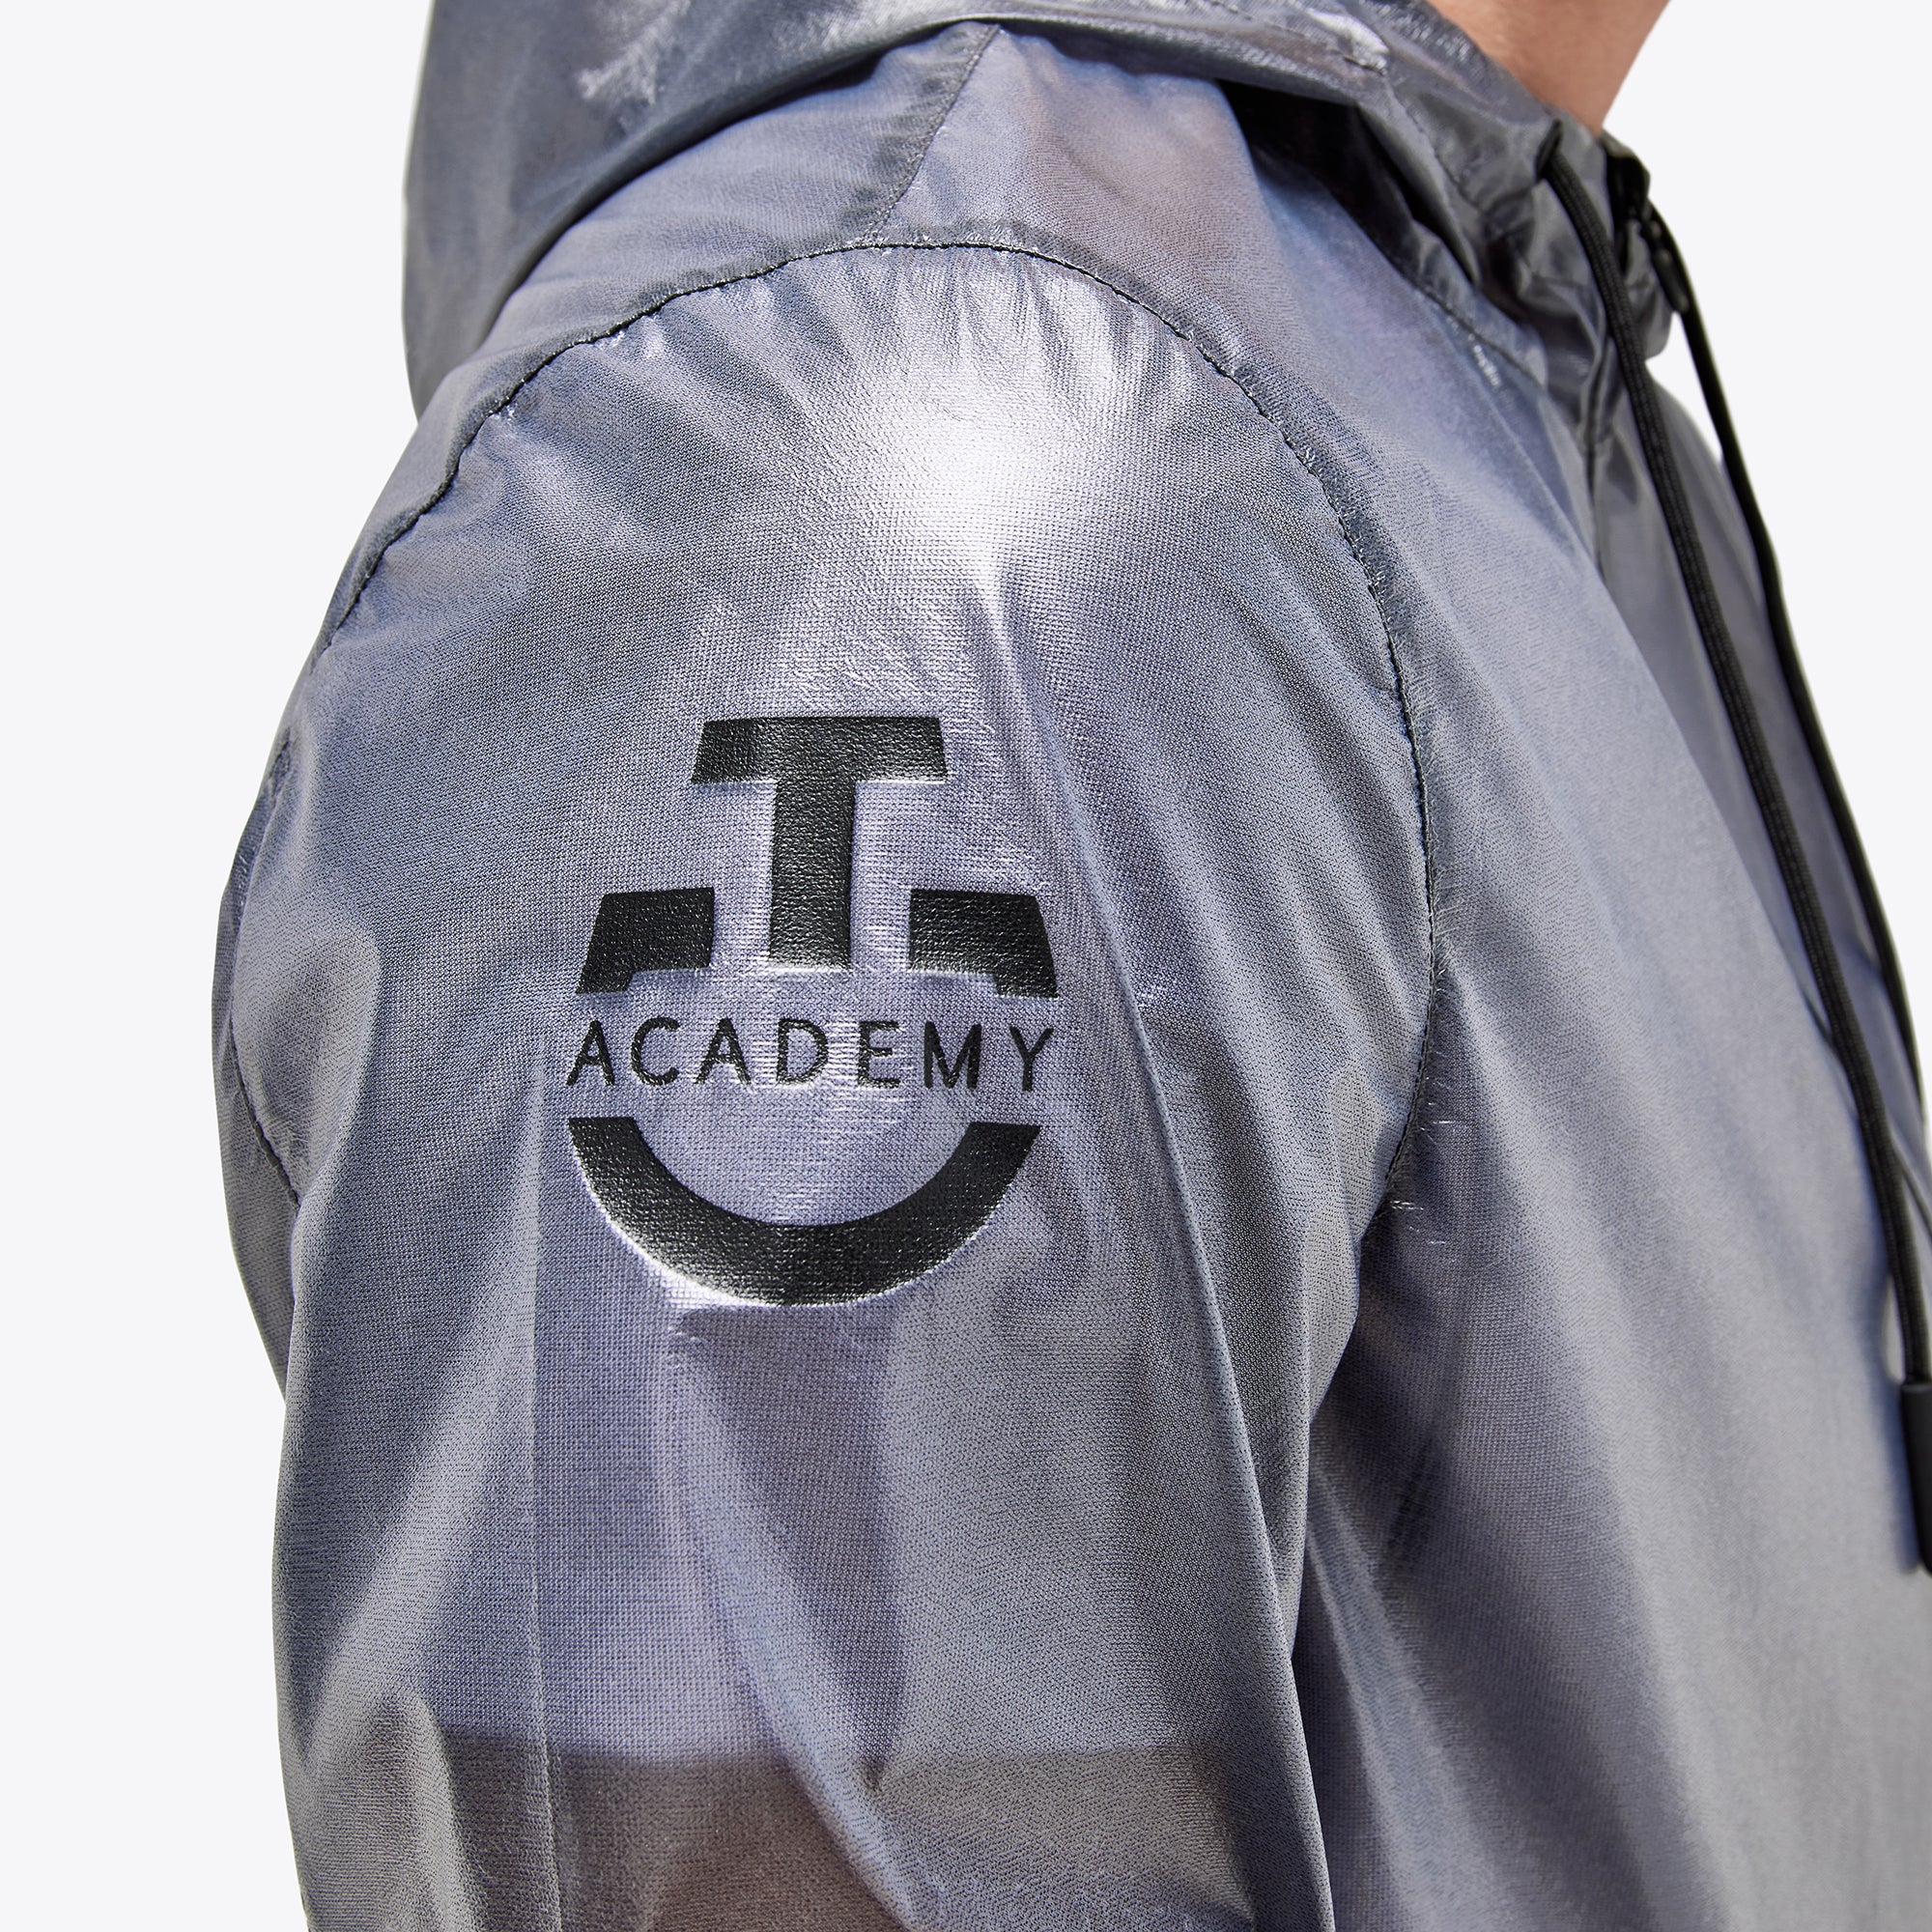 CT Academy rain jacket